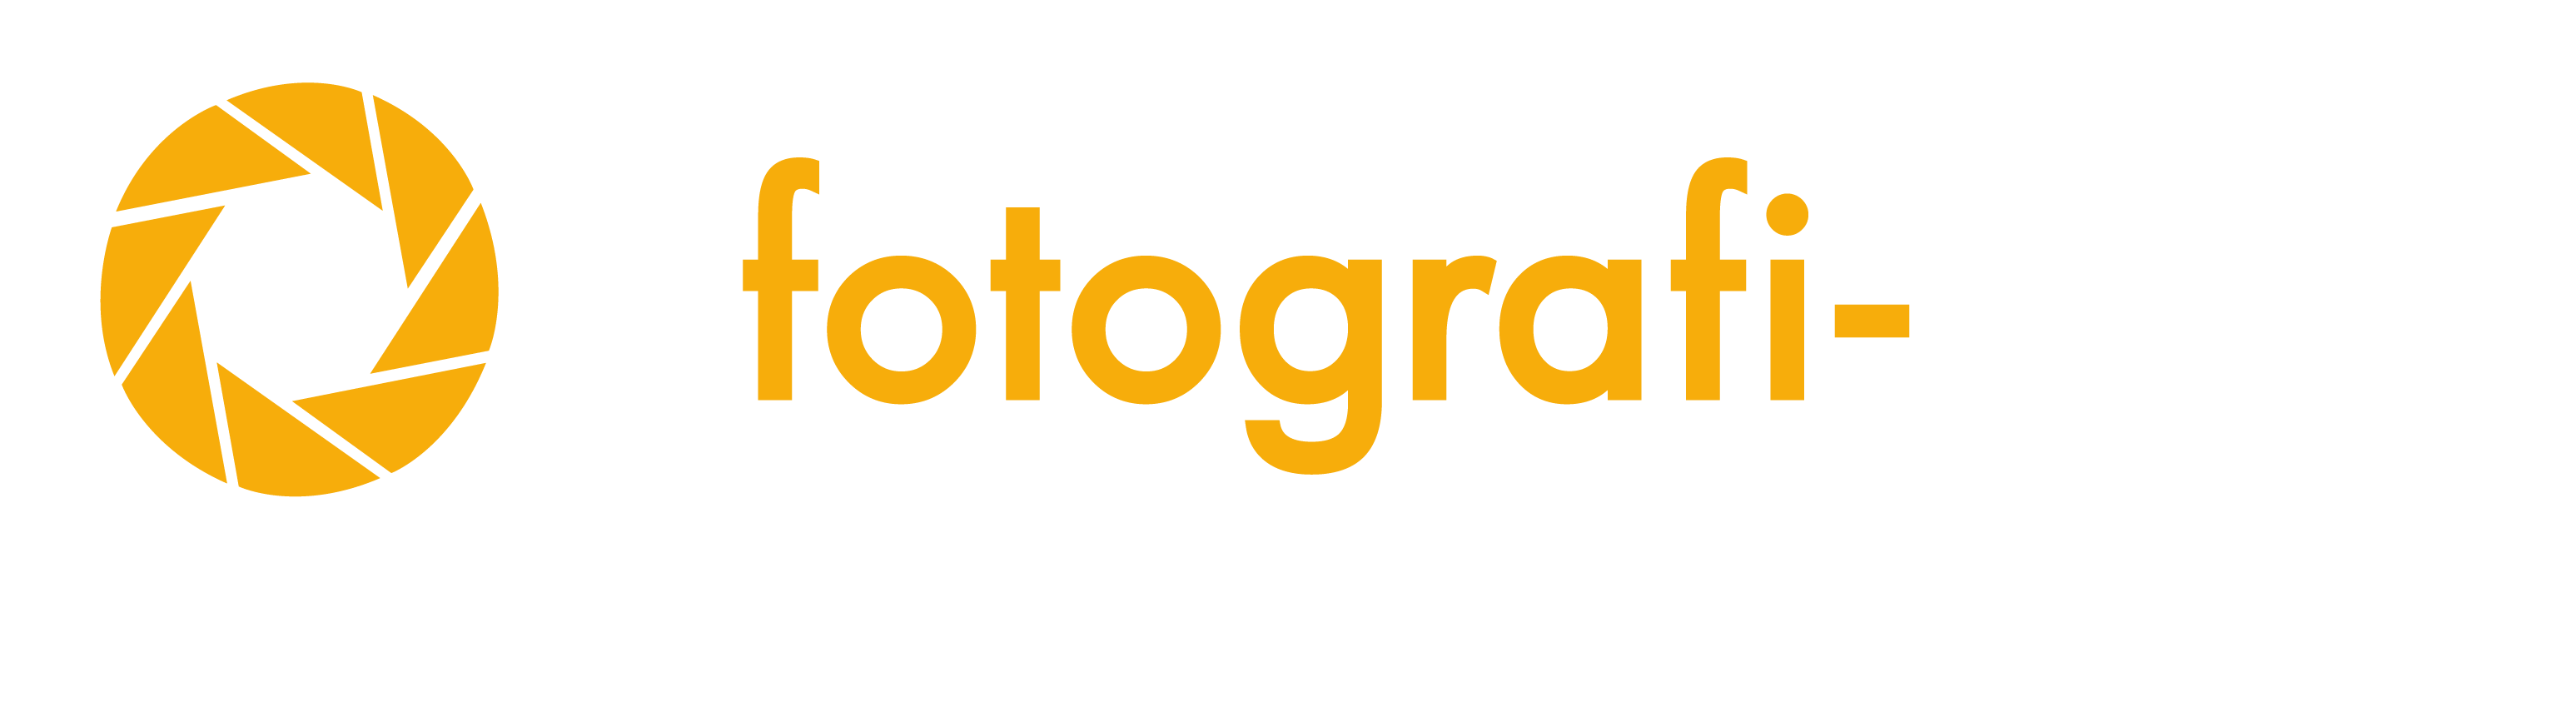 fotografi cameramani